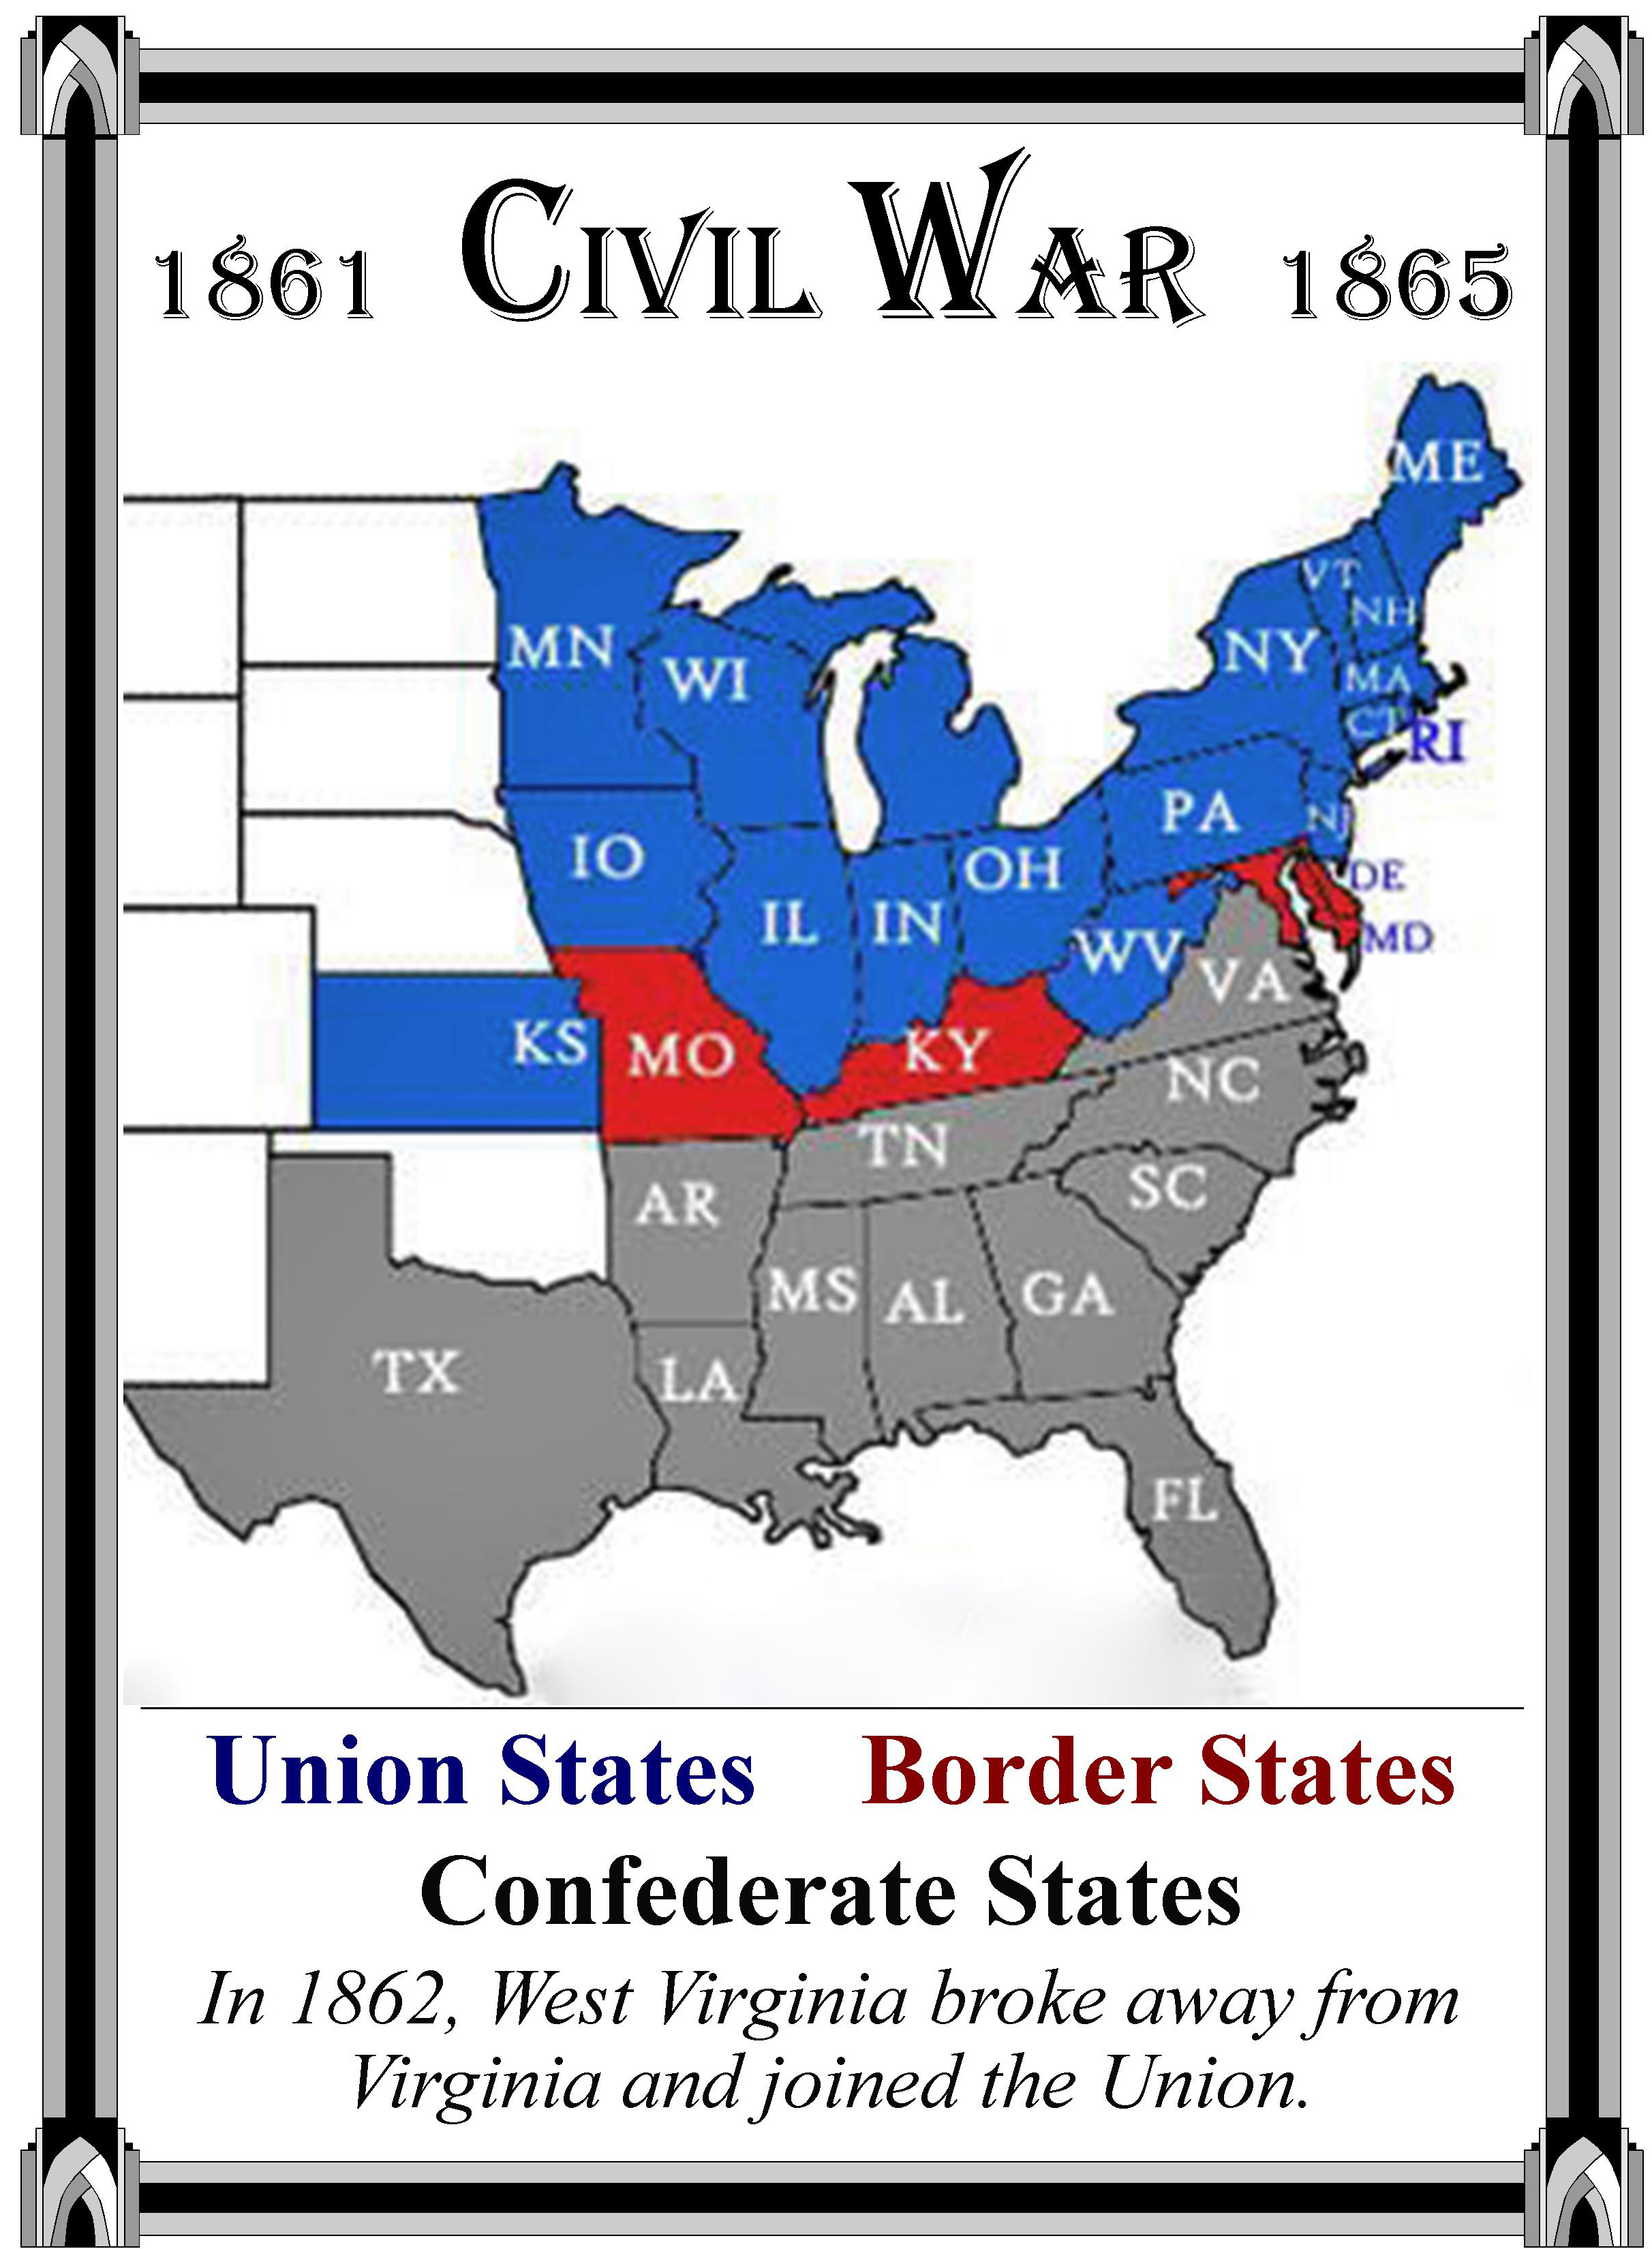 1 Civil WAR Map 